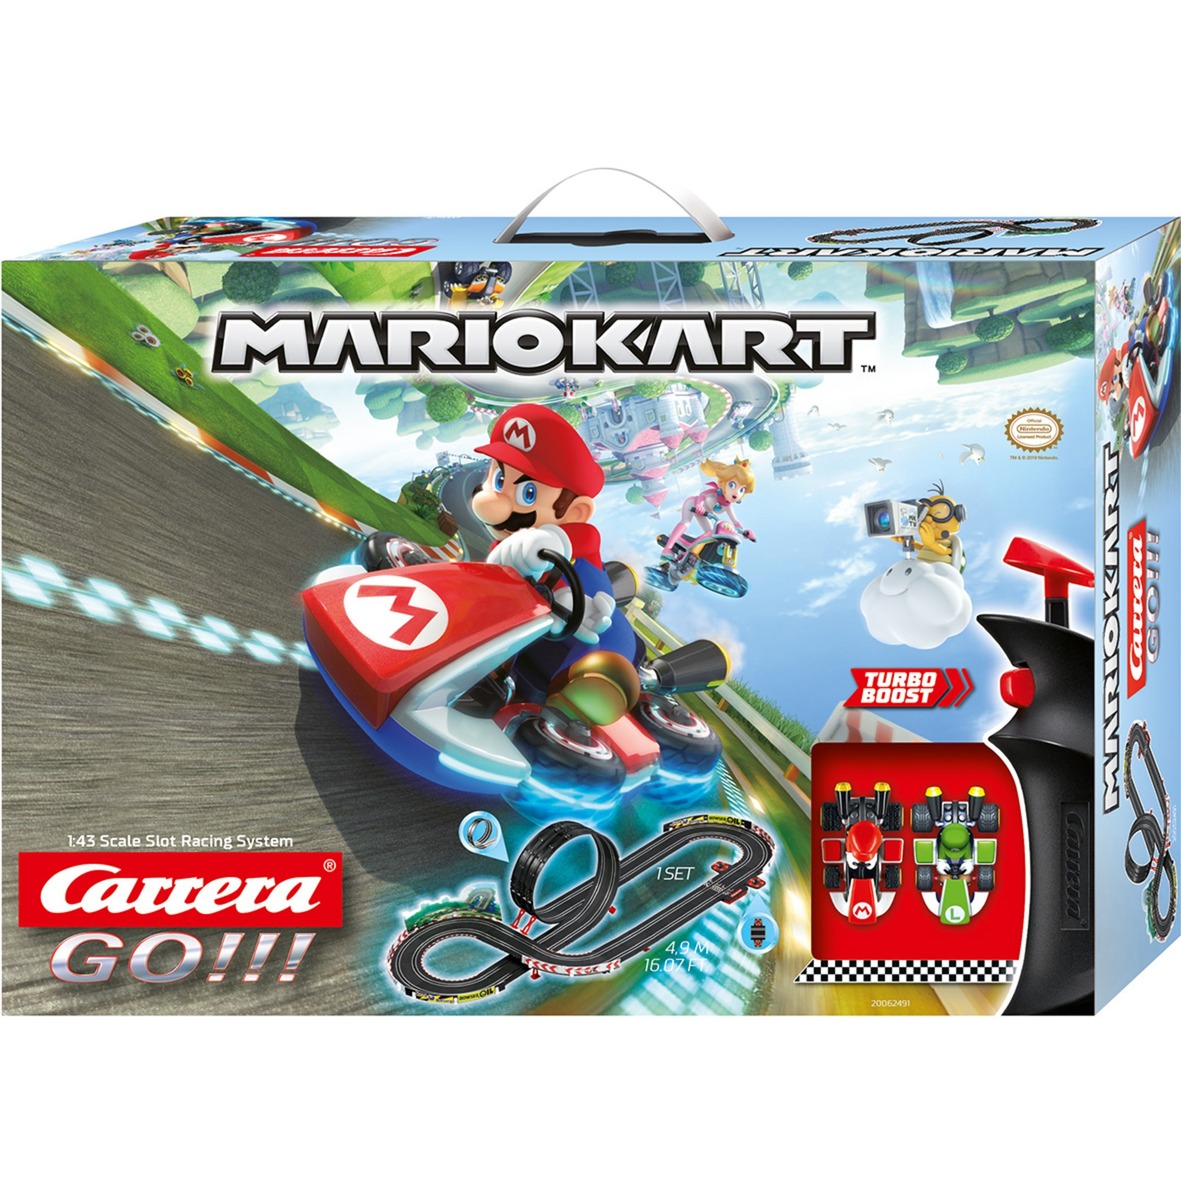 Spielzeug: Carrera GO!!! Nintendo Mario Kart 8, Rennbahn